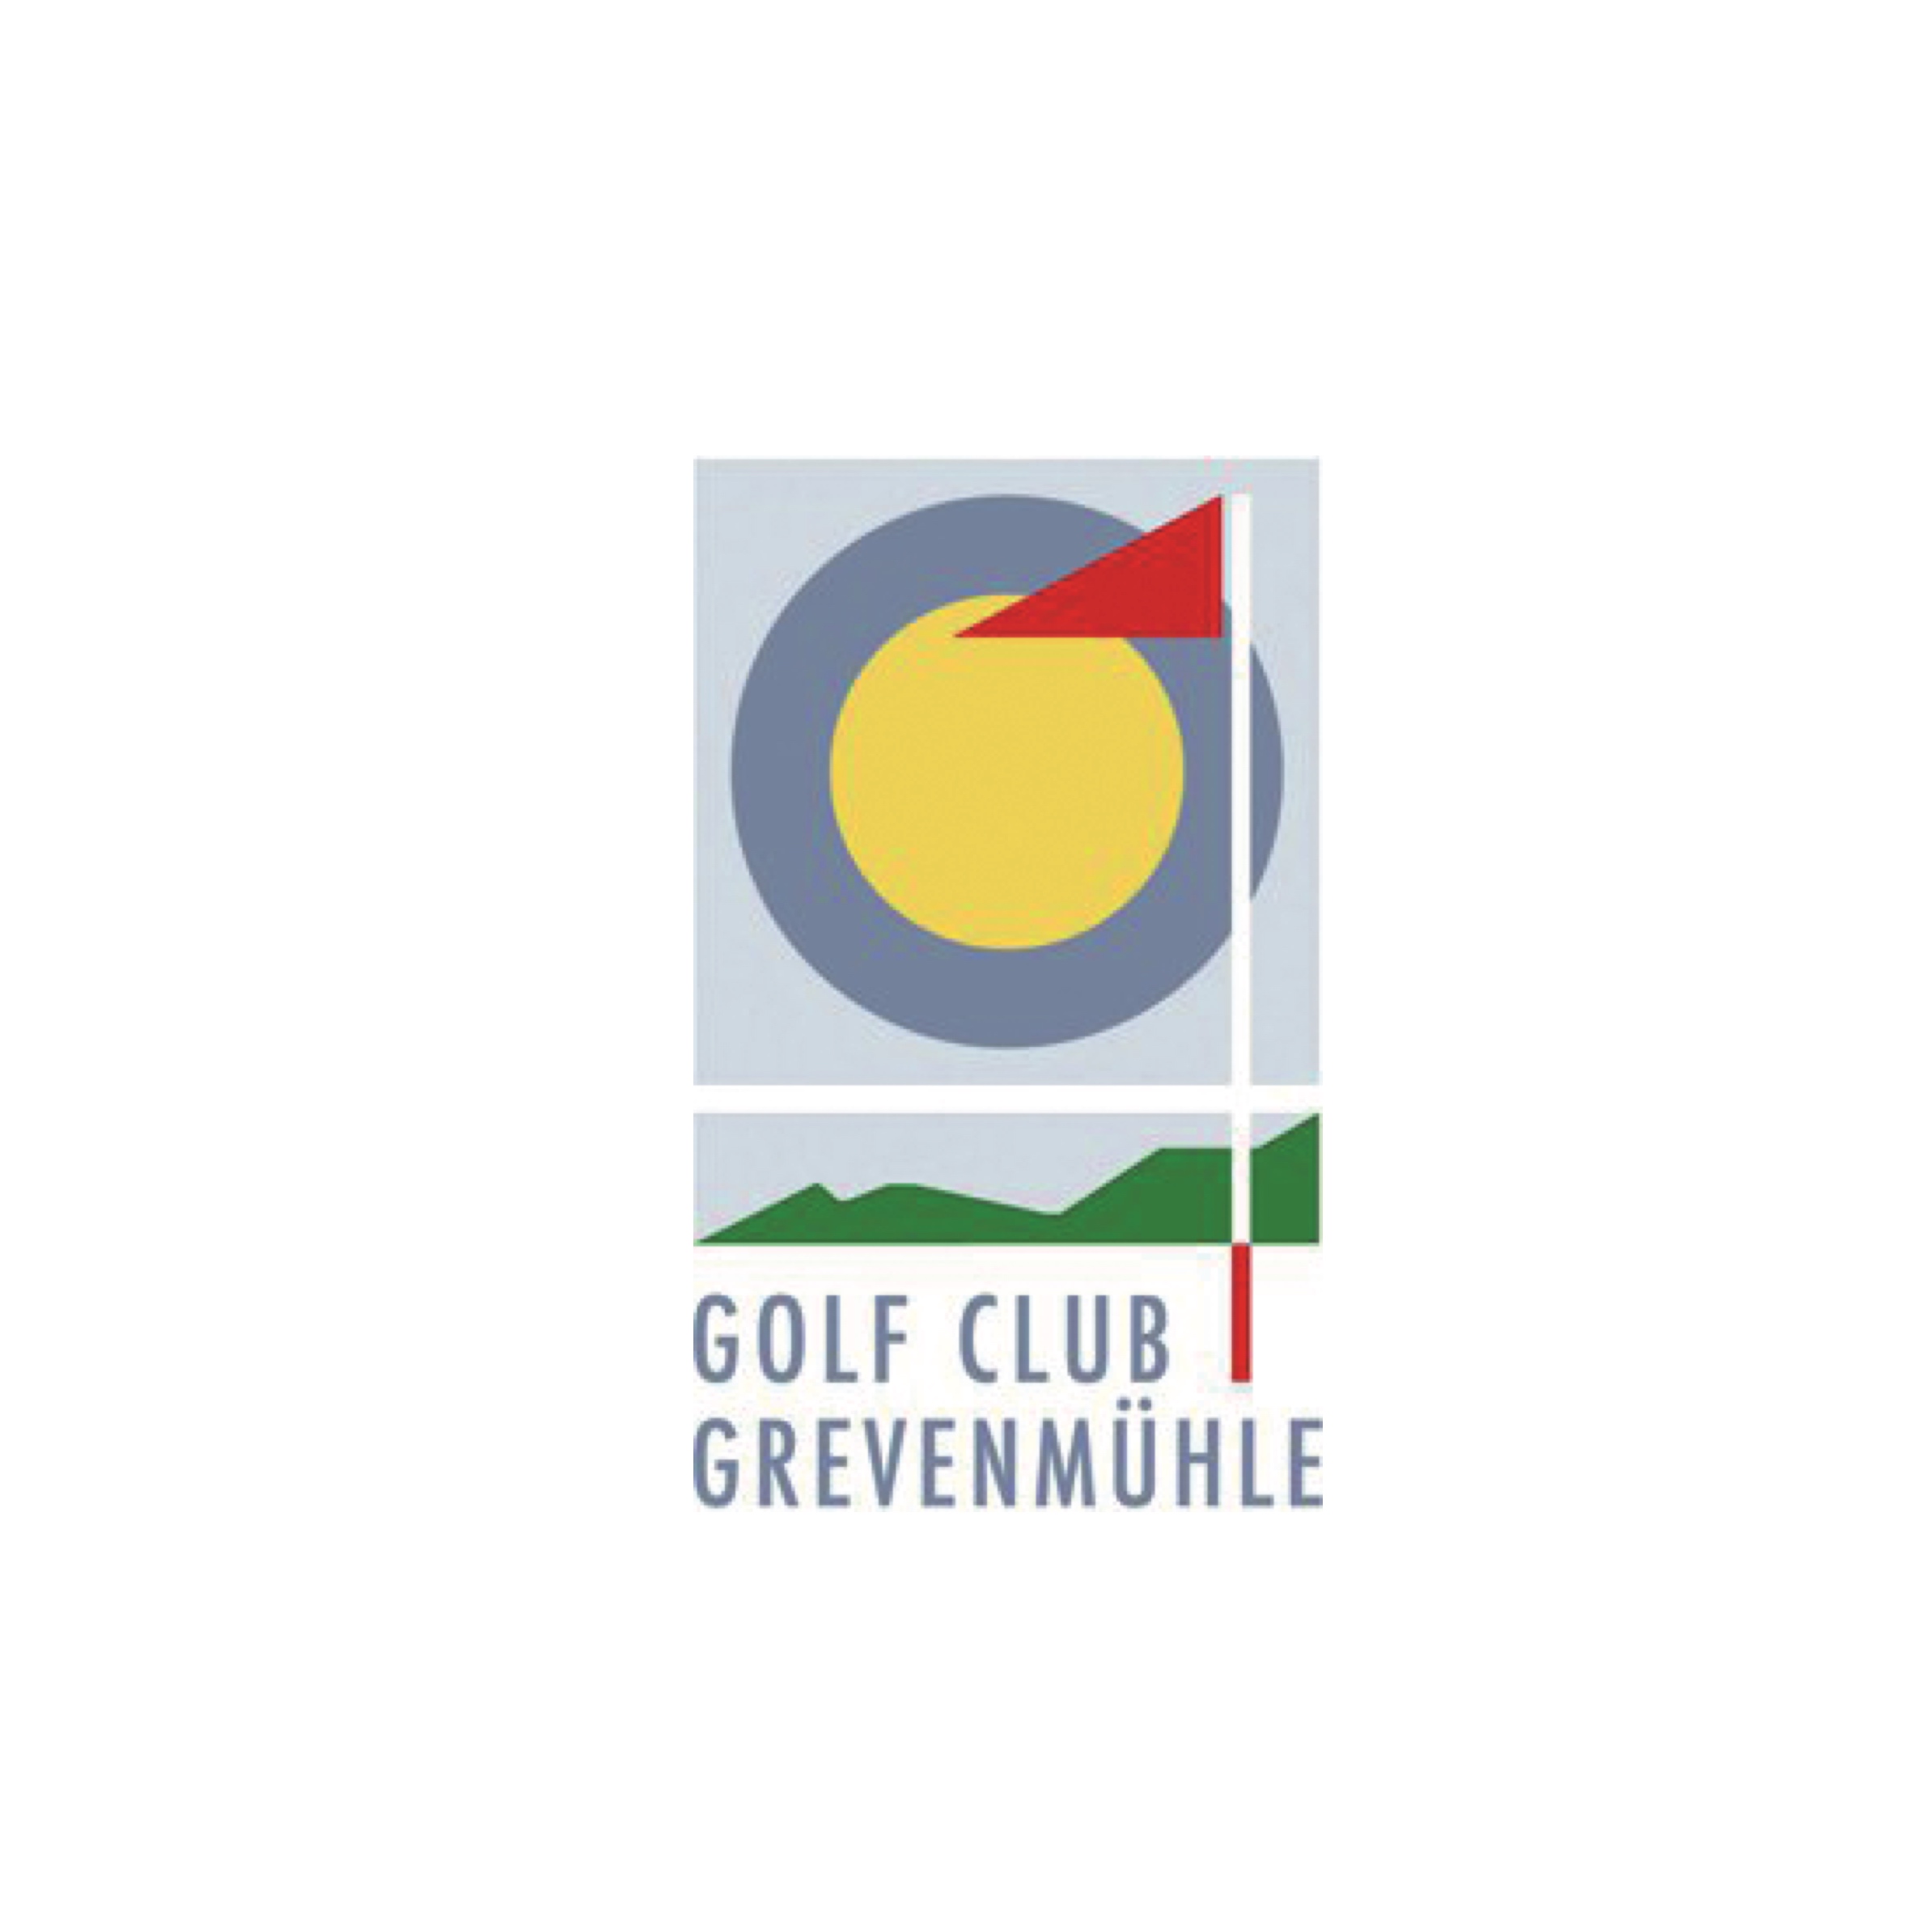 27. Grevenmühle (Golf Club Grevenmühle)